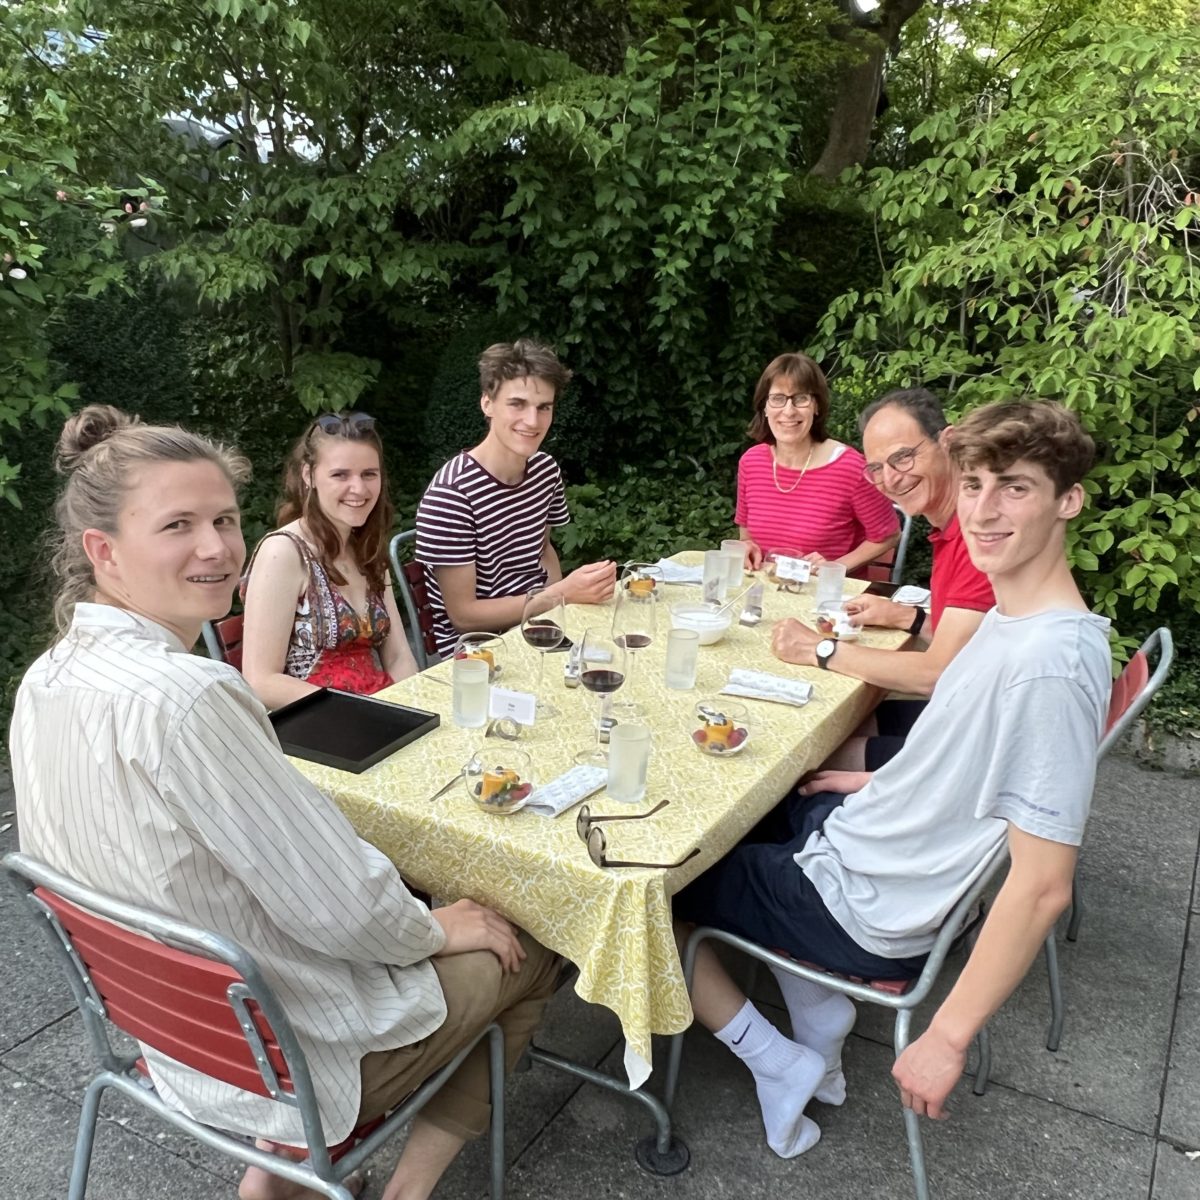 Catering for Gebrtstagparty in Zurich in summer 2022